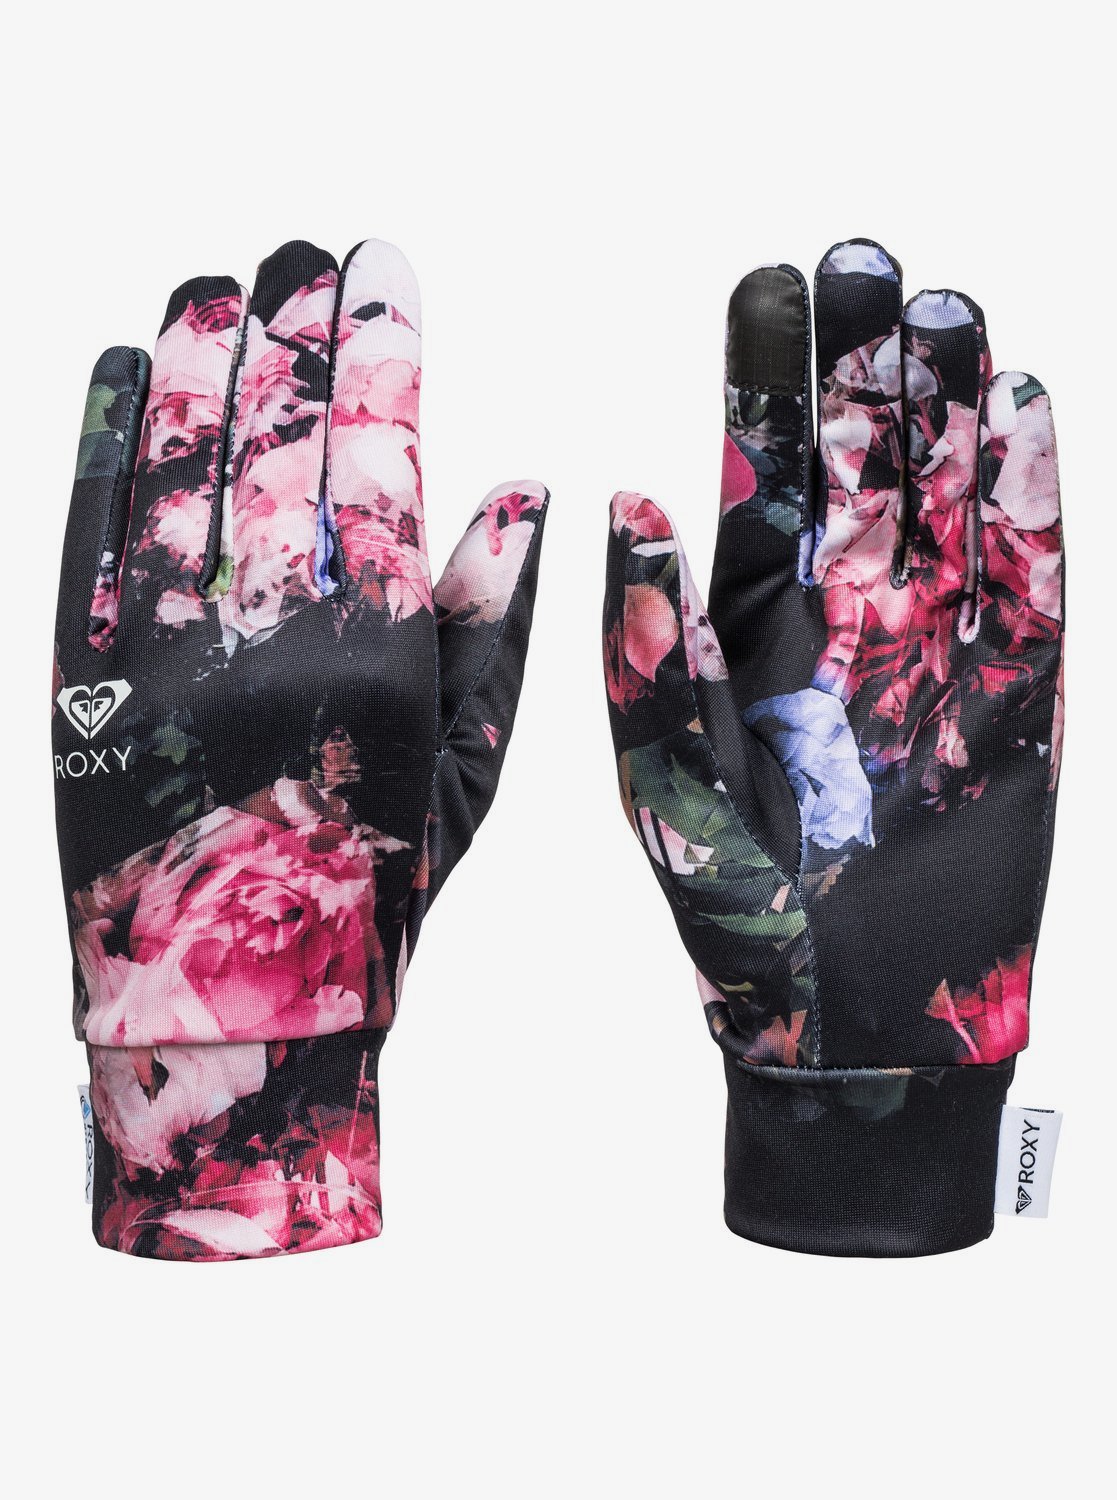 Розовые перчатки сноубордические roxy. Roxy Hydrosmart перчатки. Roxy перчатки сноубордические. Roxy перчатки сноубордические женские. Перчатки Cairn Silk Gloves j.